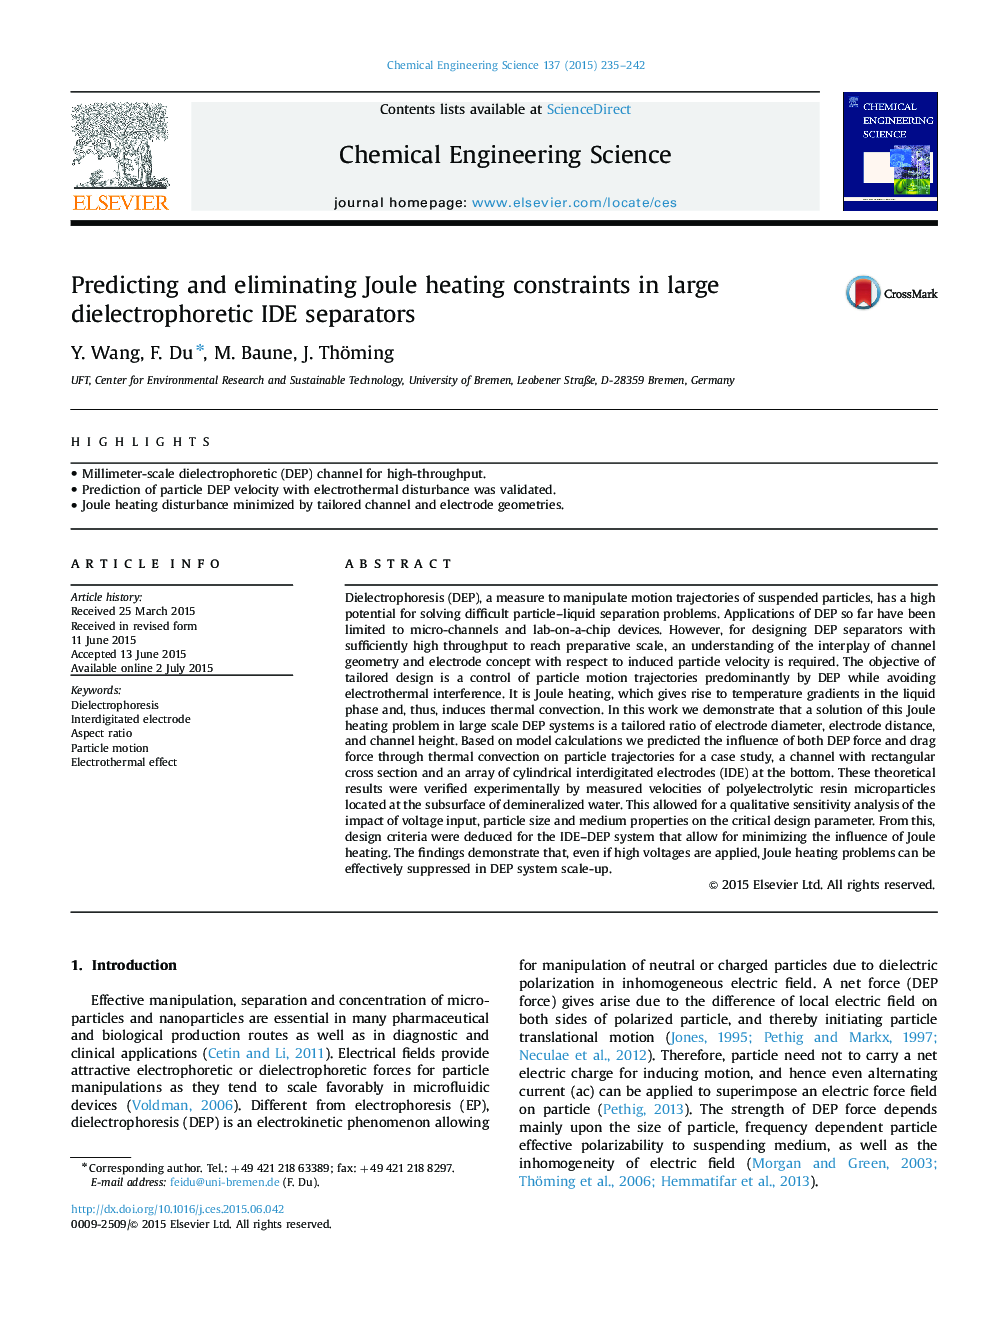 Predicting and eliminating Joule heating constraints in large dielectrophoretic IDE separators